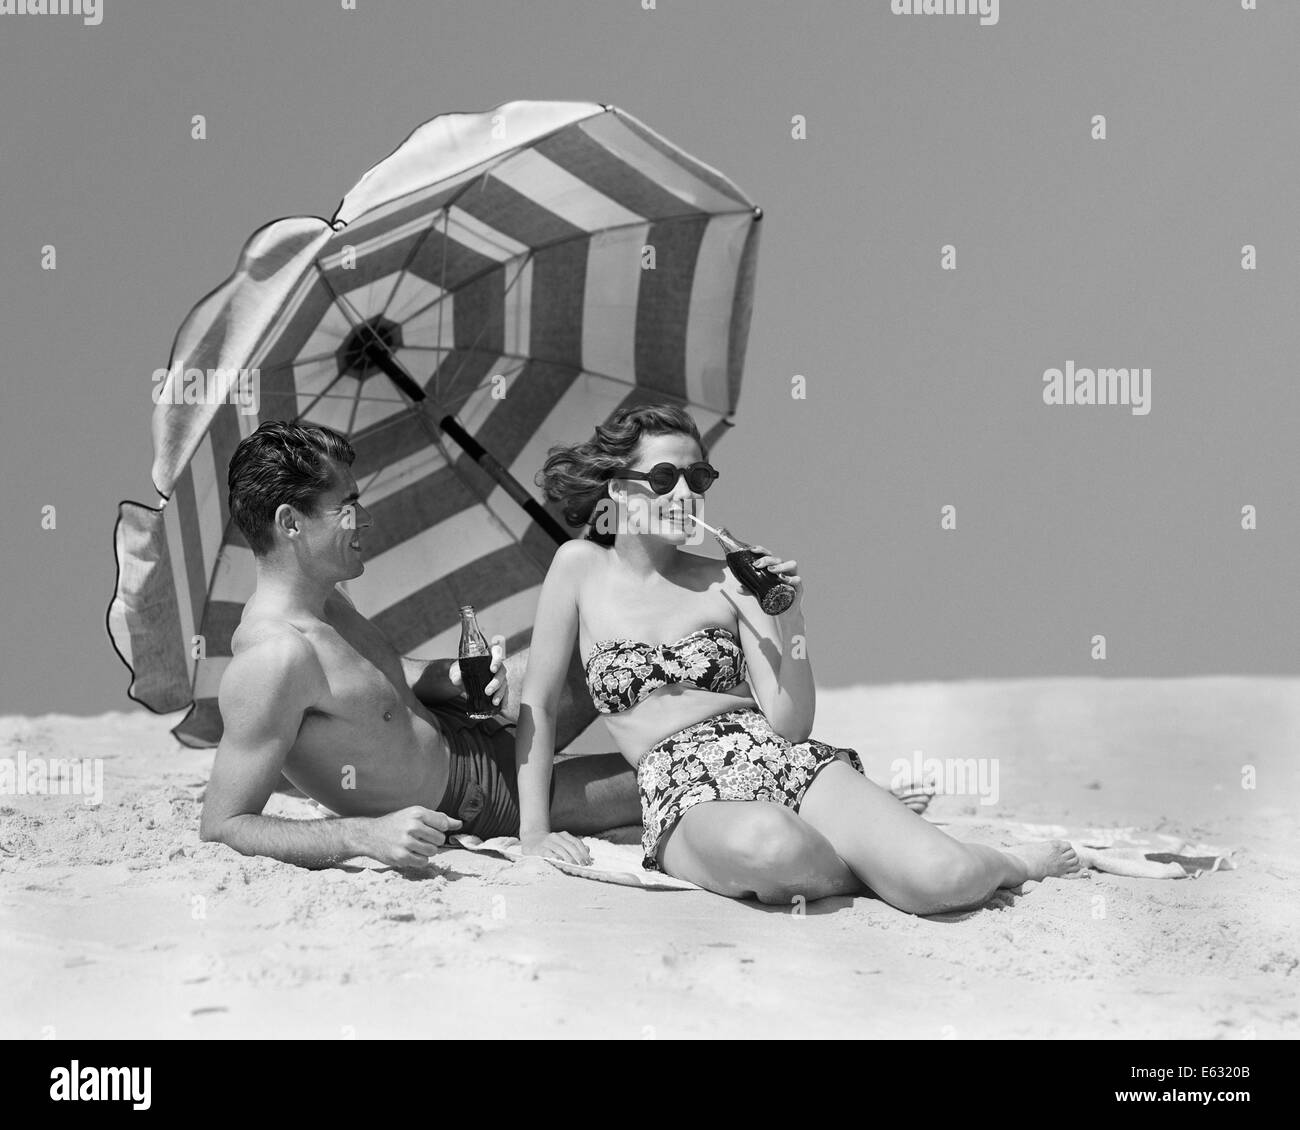 1950s COUPLE MAN WOMAN SUNBATHING DRINKING BOTTLES SODA BY BEACH UMBRELLA Stock Photo